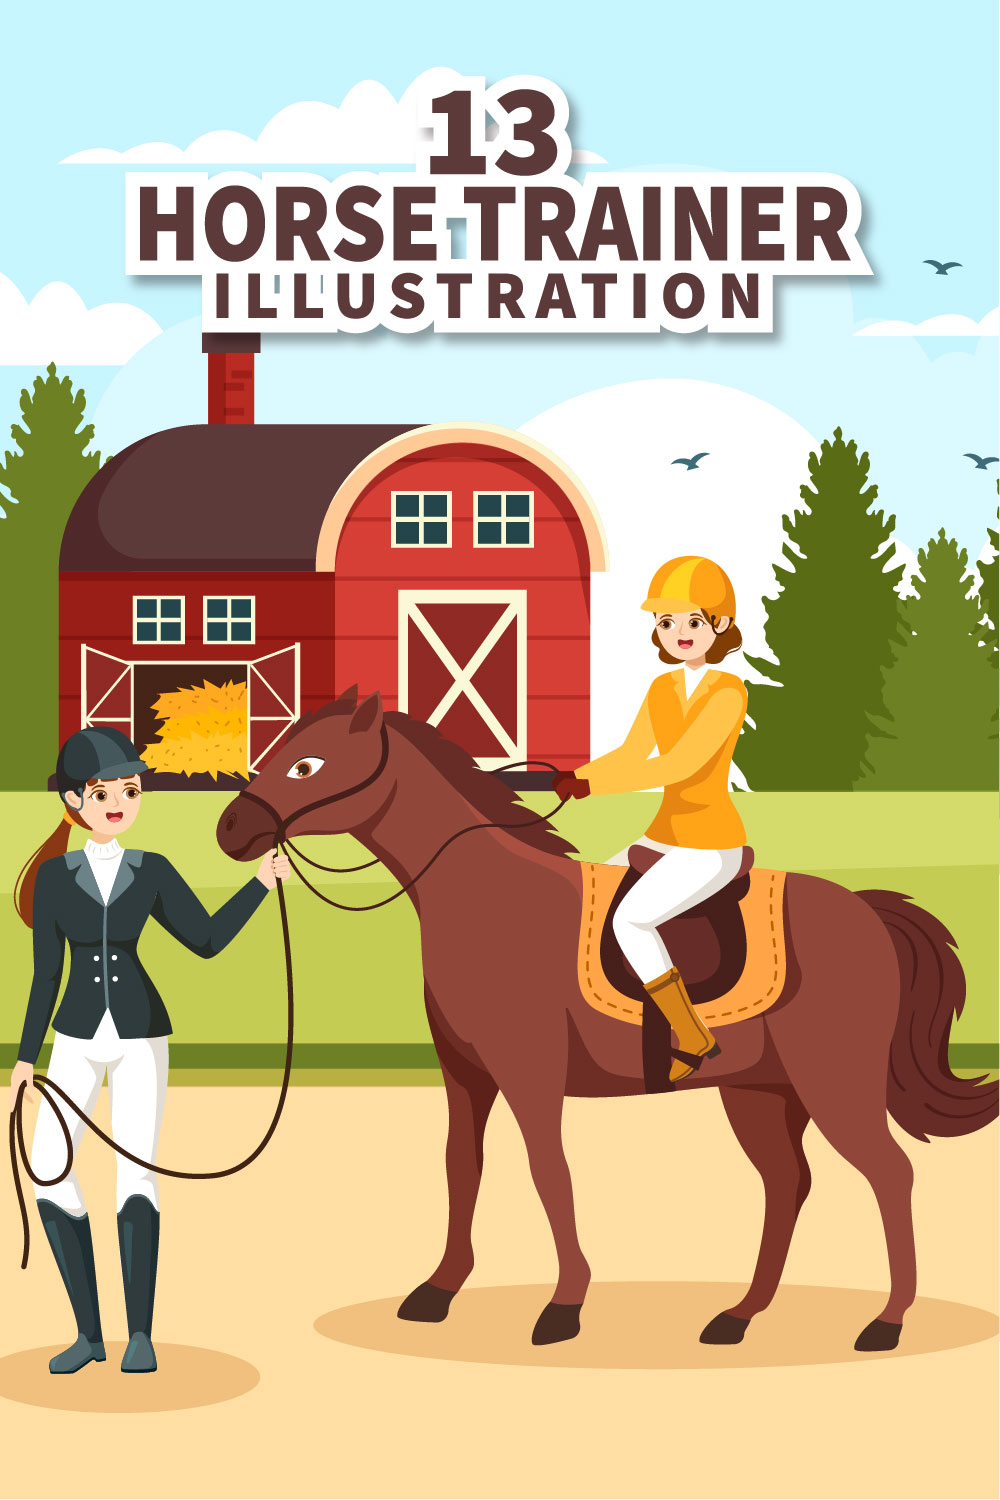 Horse Trainer Graphics Design pinterest image.